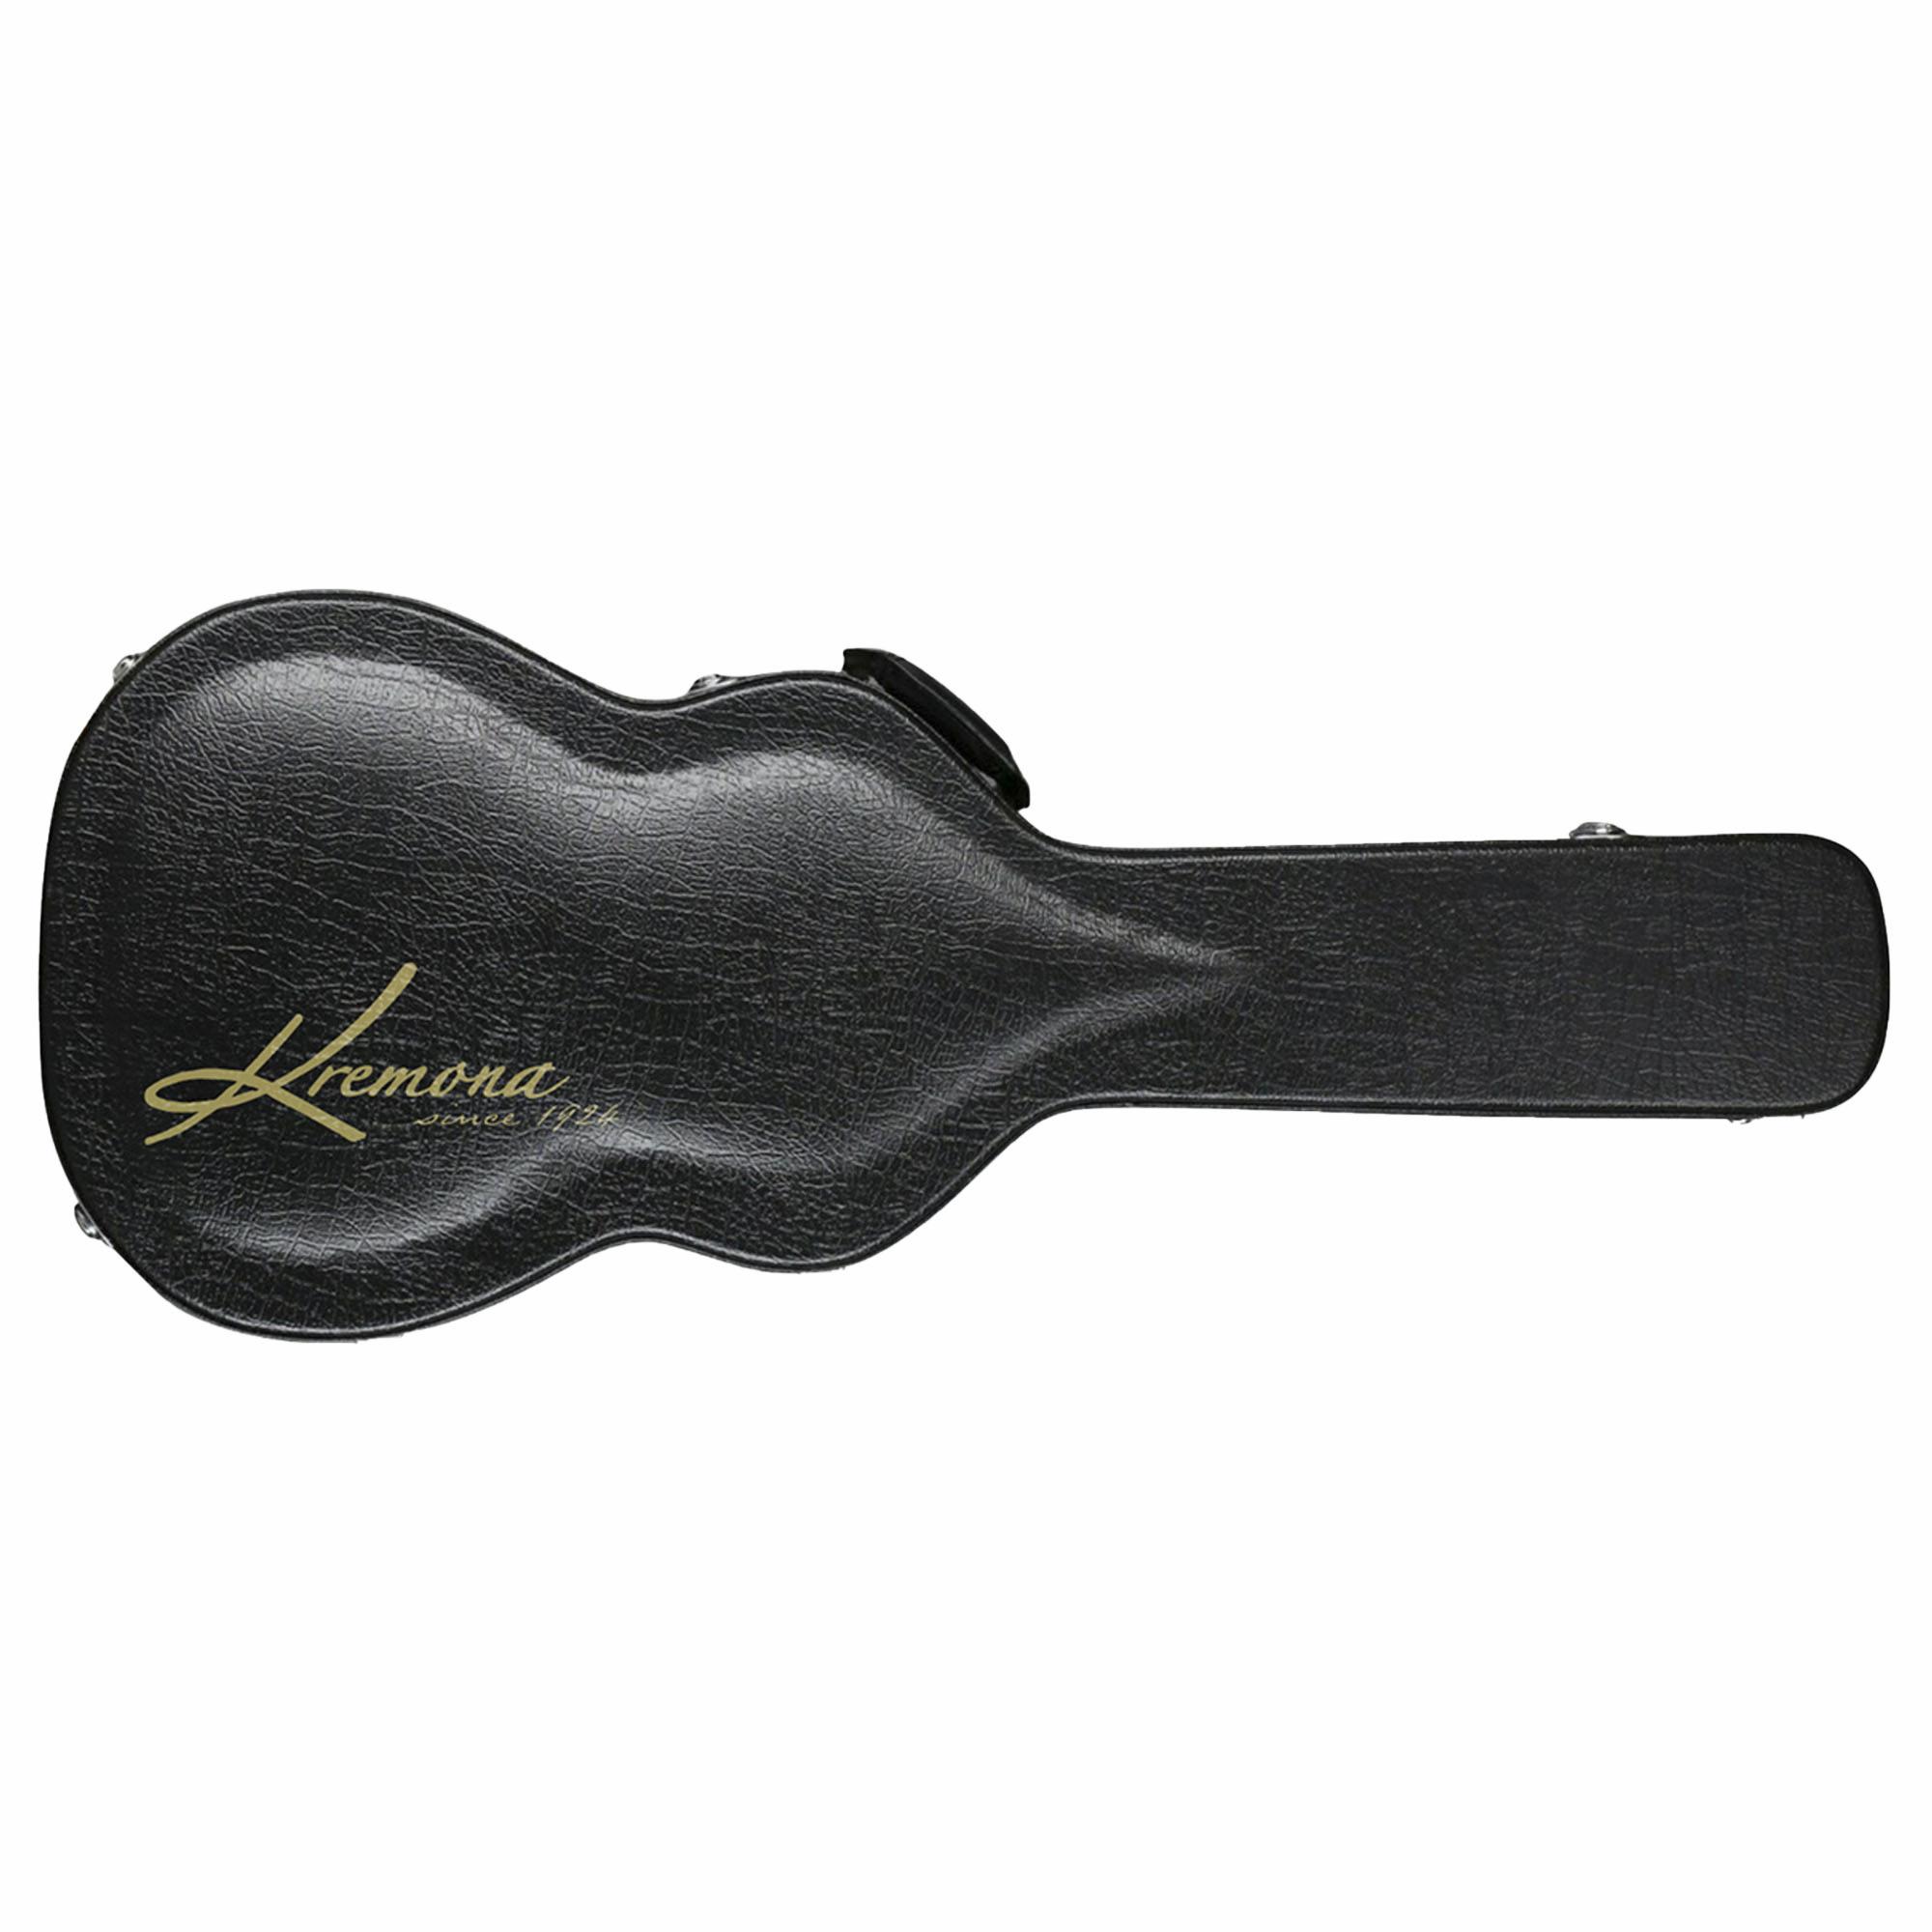 Kremona Romida Guitar